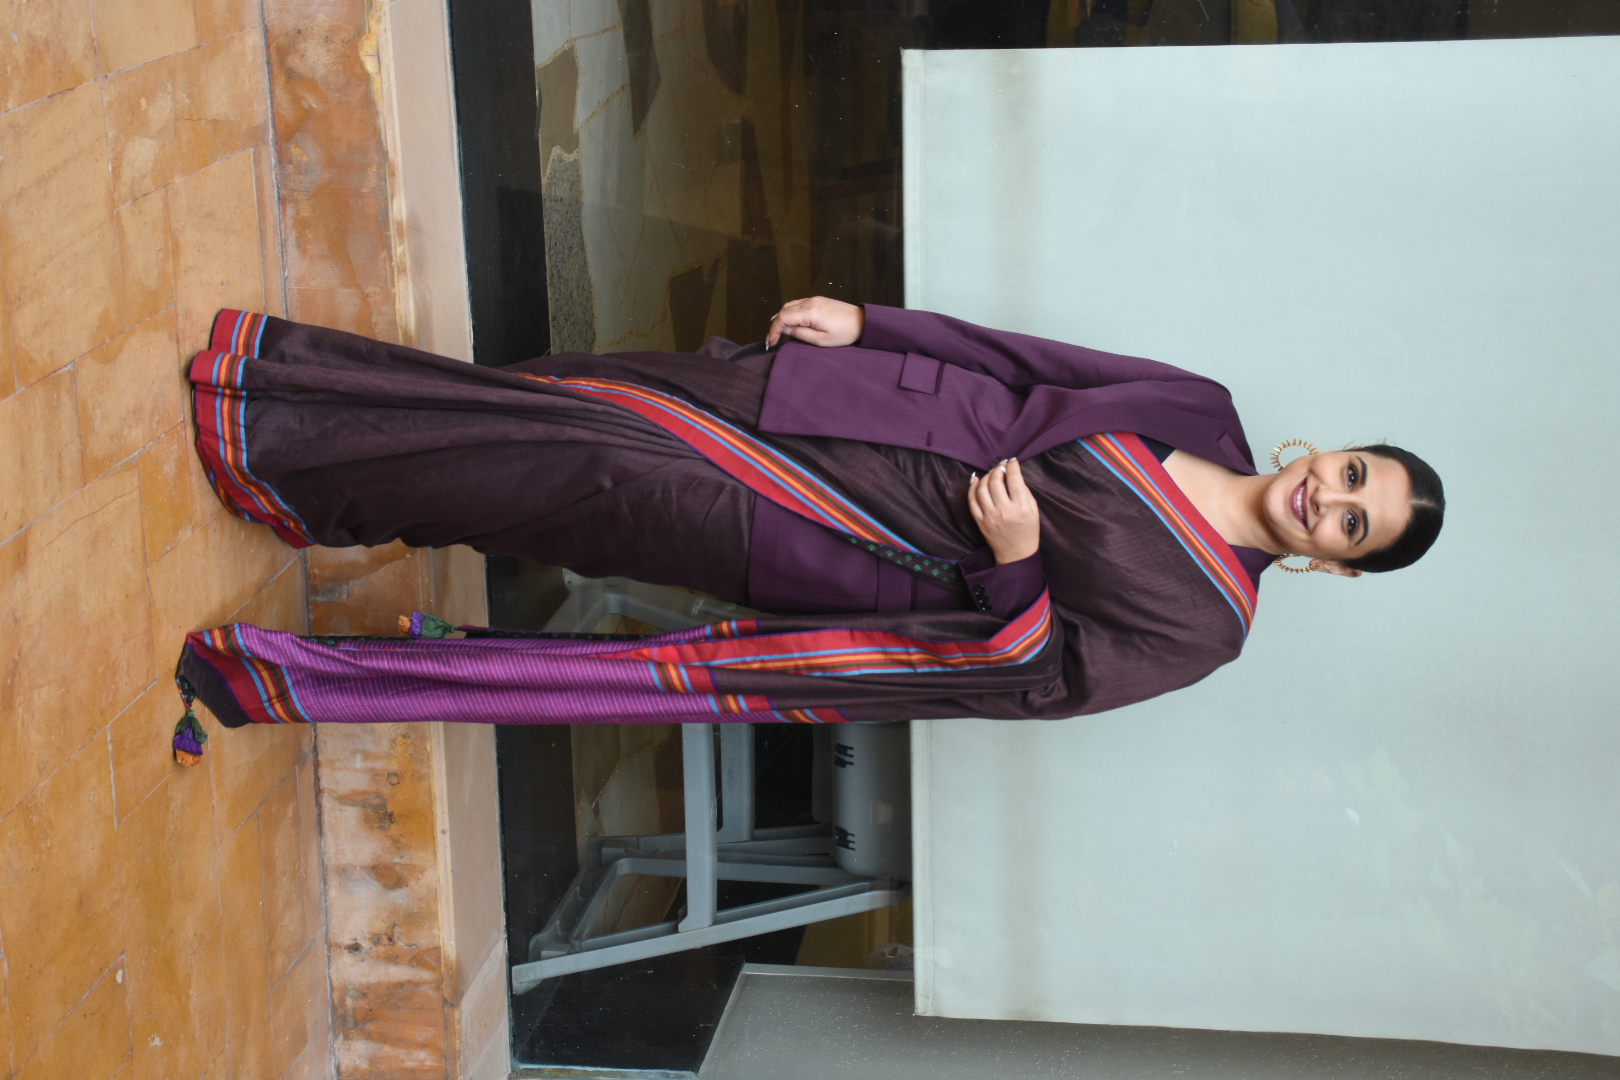 Vidya Balan looked gorgeous in the purple saree worn with a matching blazer